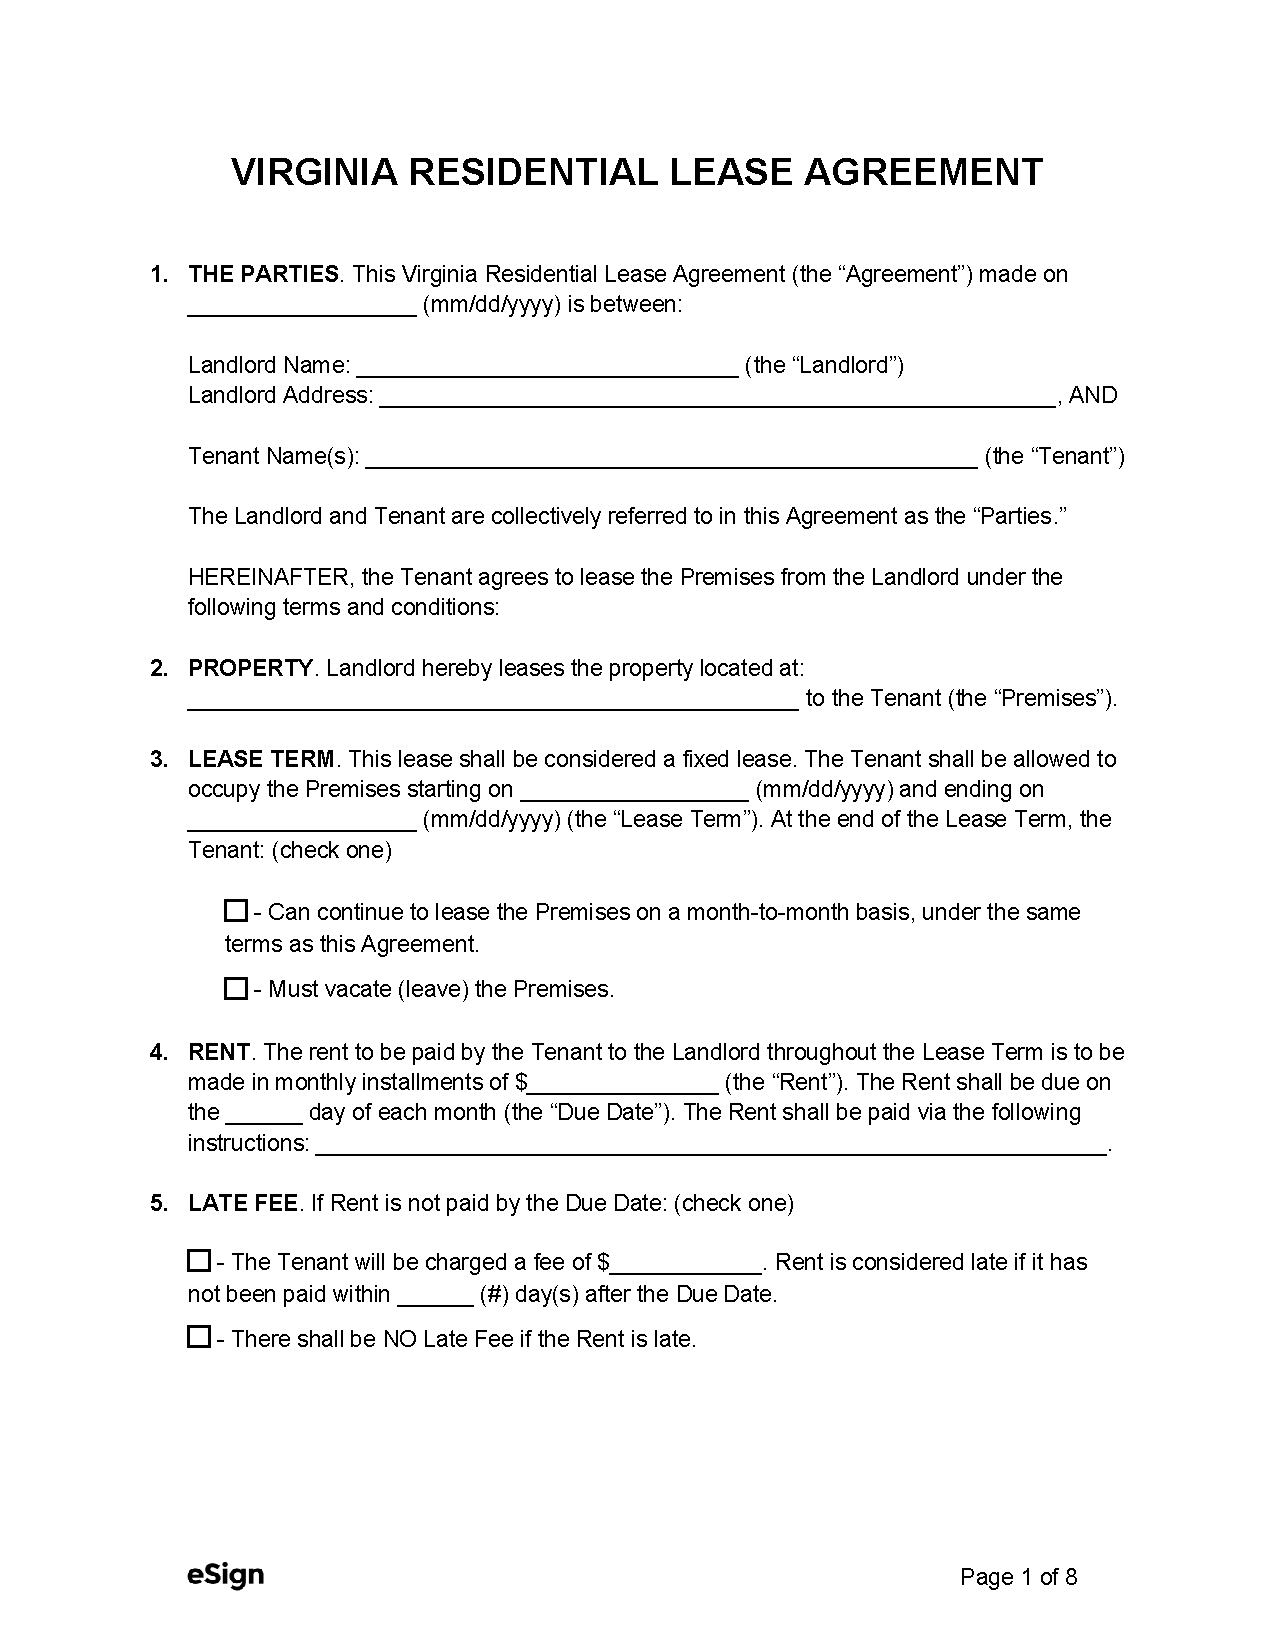 virginia-standard-residential-lease-agreement-printable-form